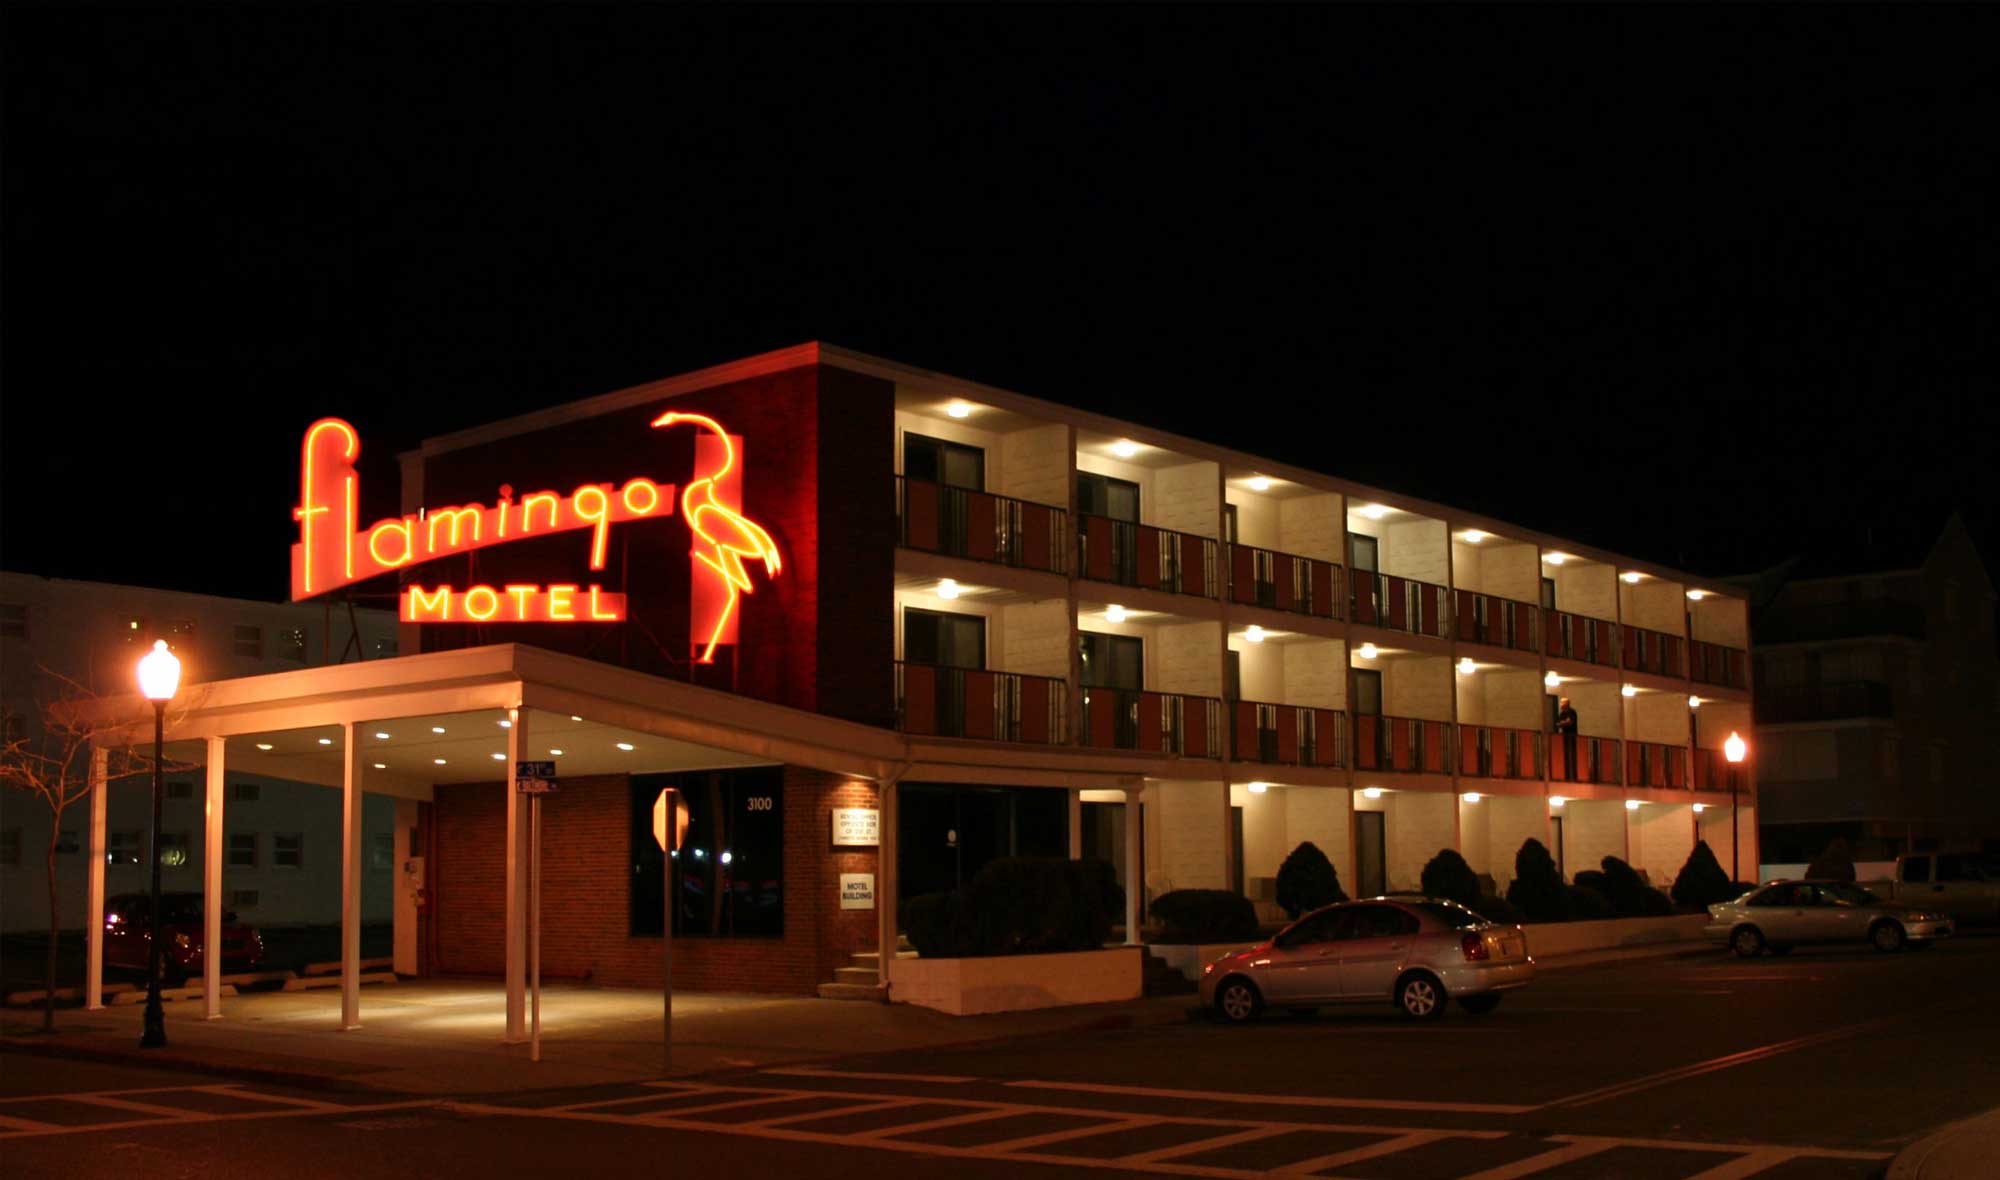 Units | Downtown Ocean City MD Motels | Flamingo Motel